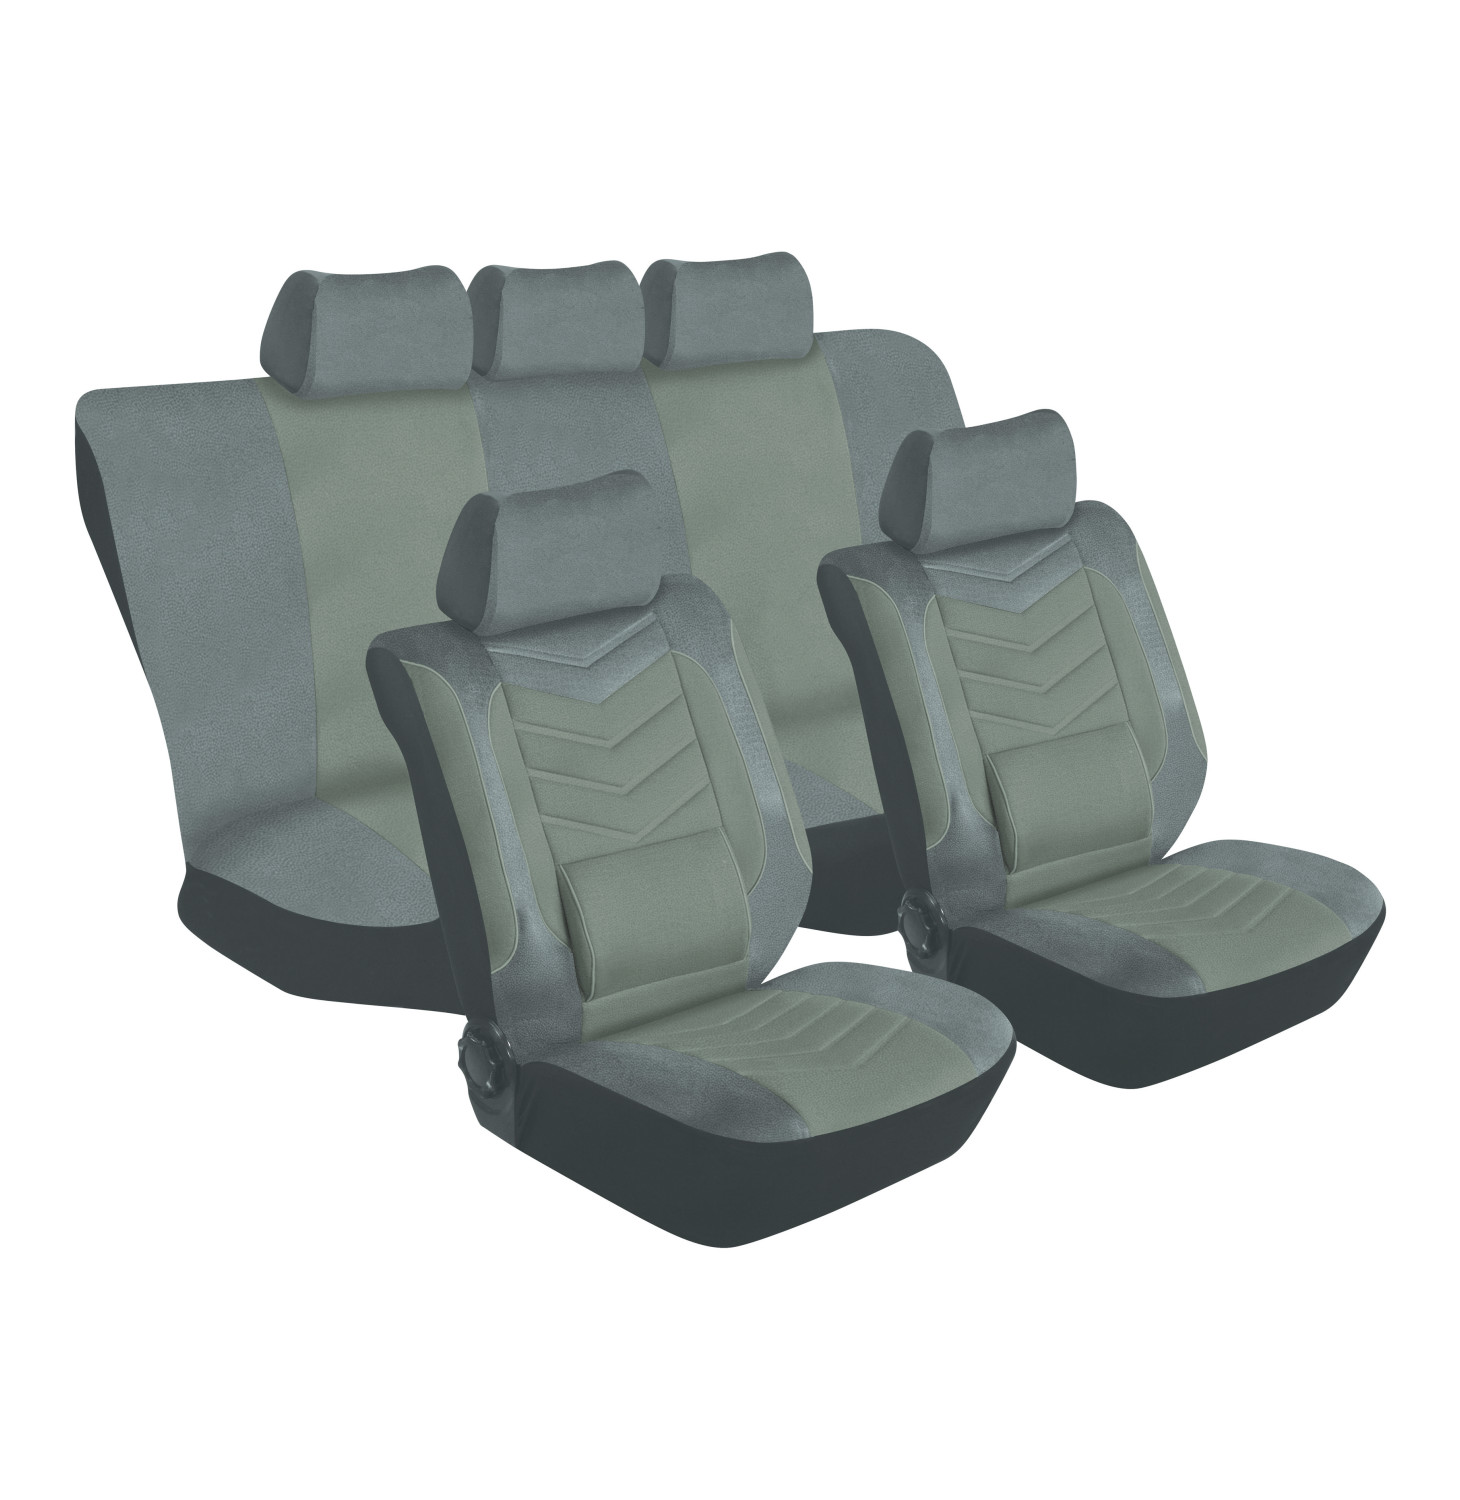 Stingray Galaxy Full Car Seat Cover Set – 11 Piece (Black/Silver)